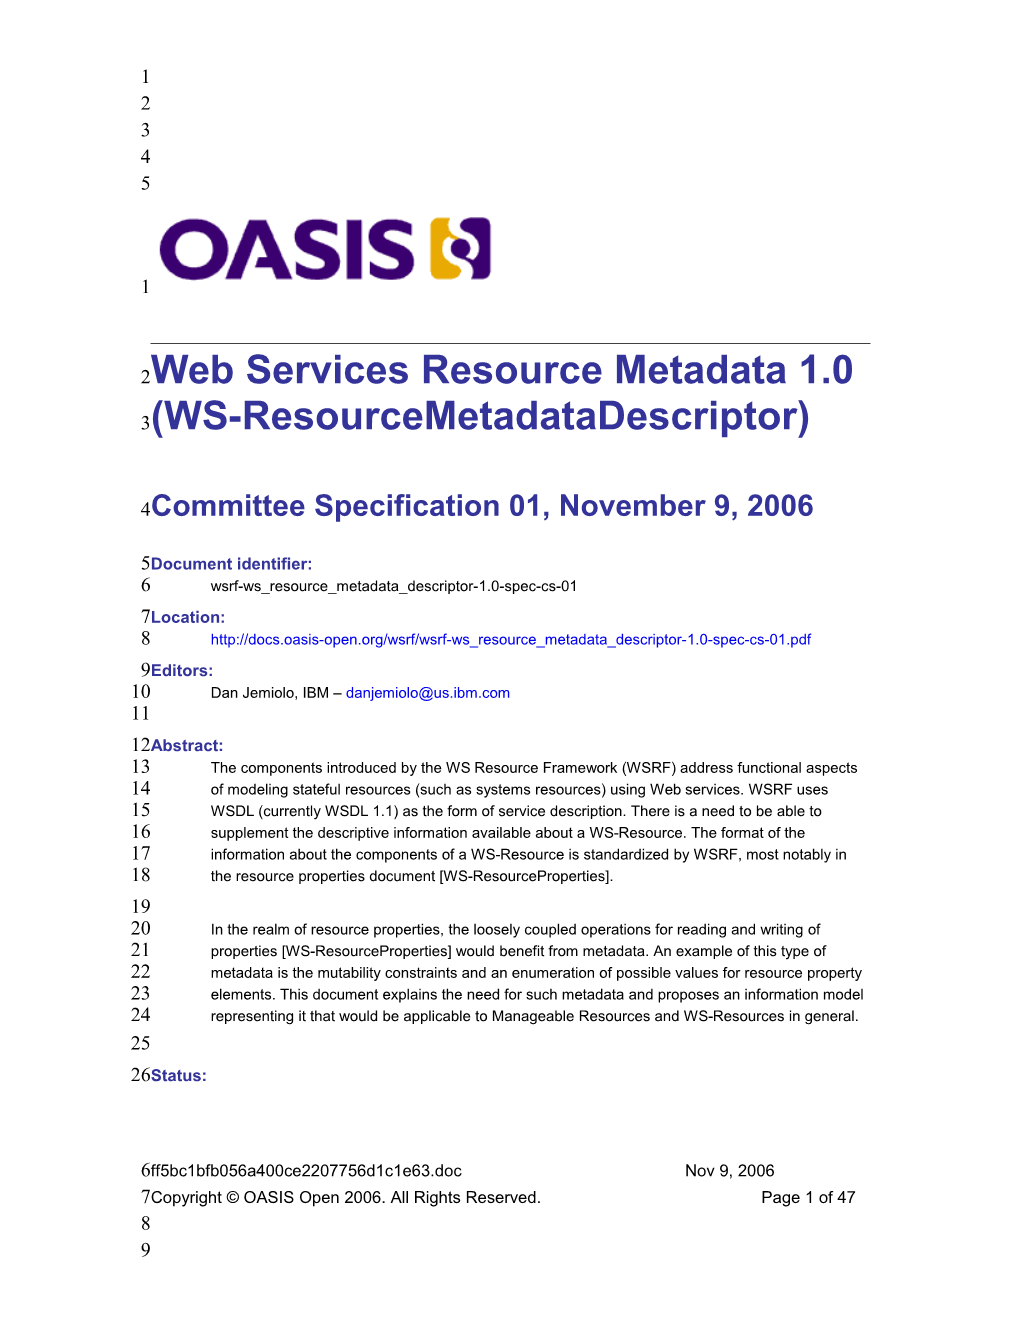 Web Services Resource Metadata 1.0 (WS-Resourcemetadatadescriptor)